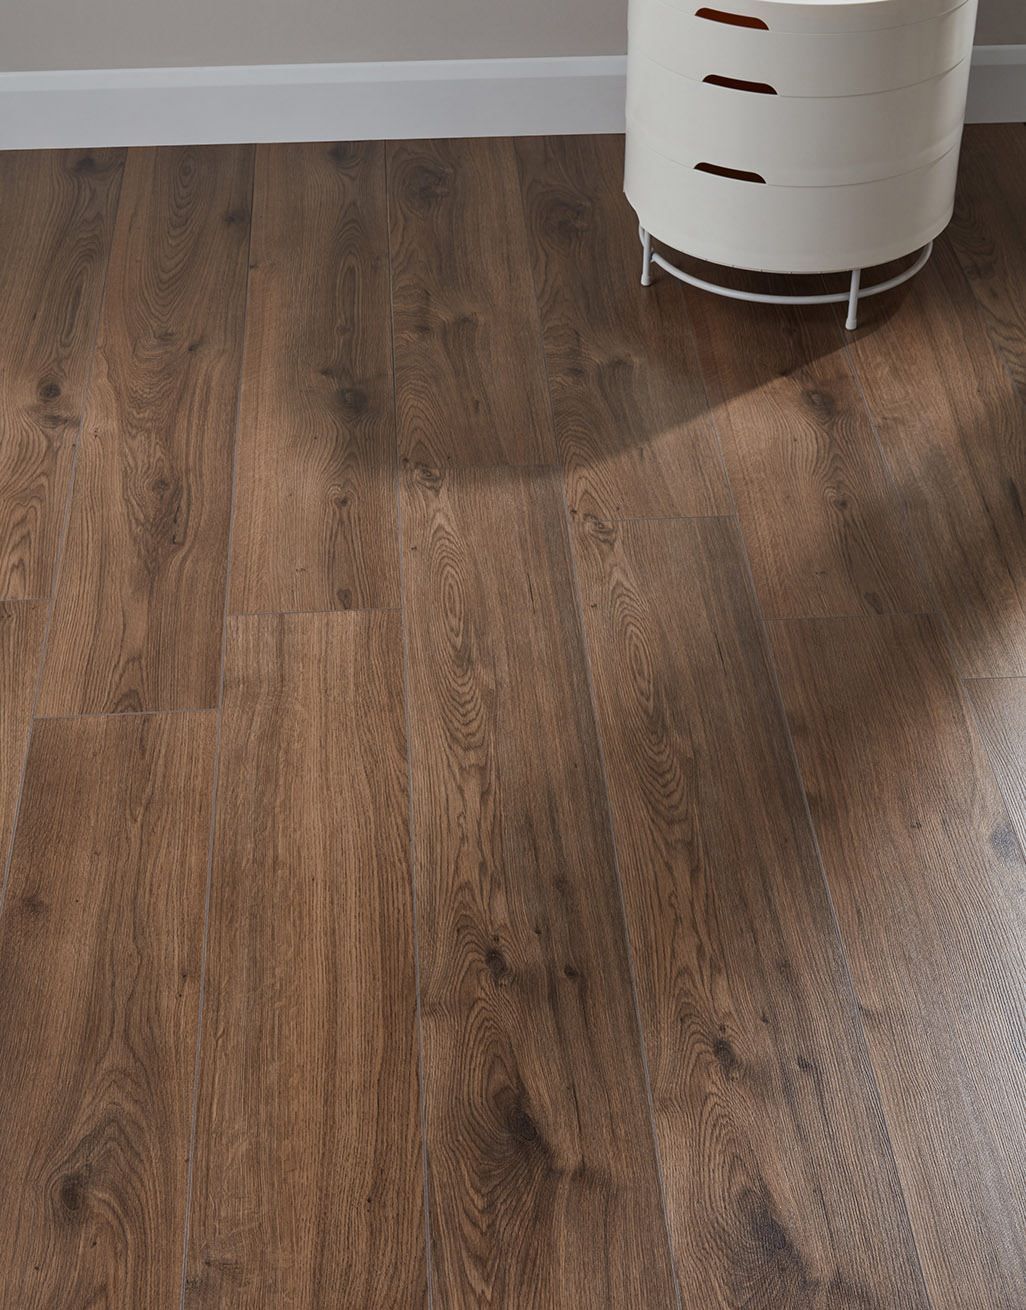 Benefits of walnut laminate flooring